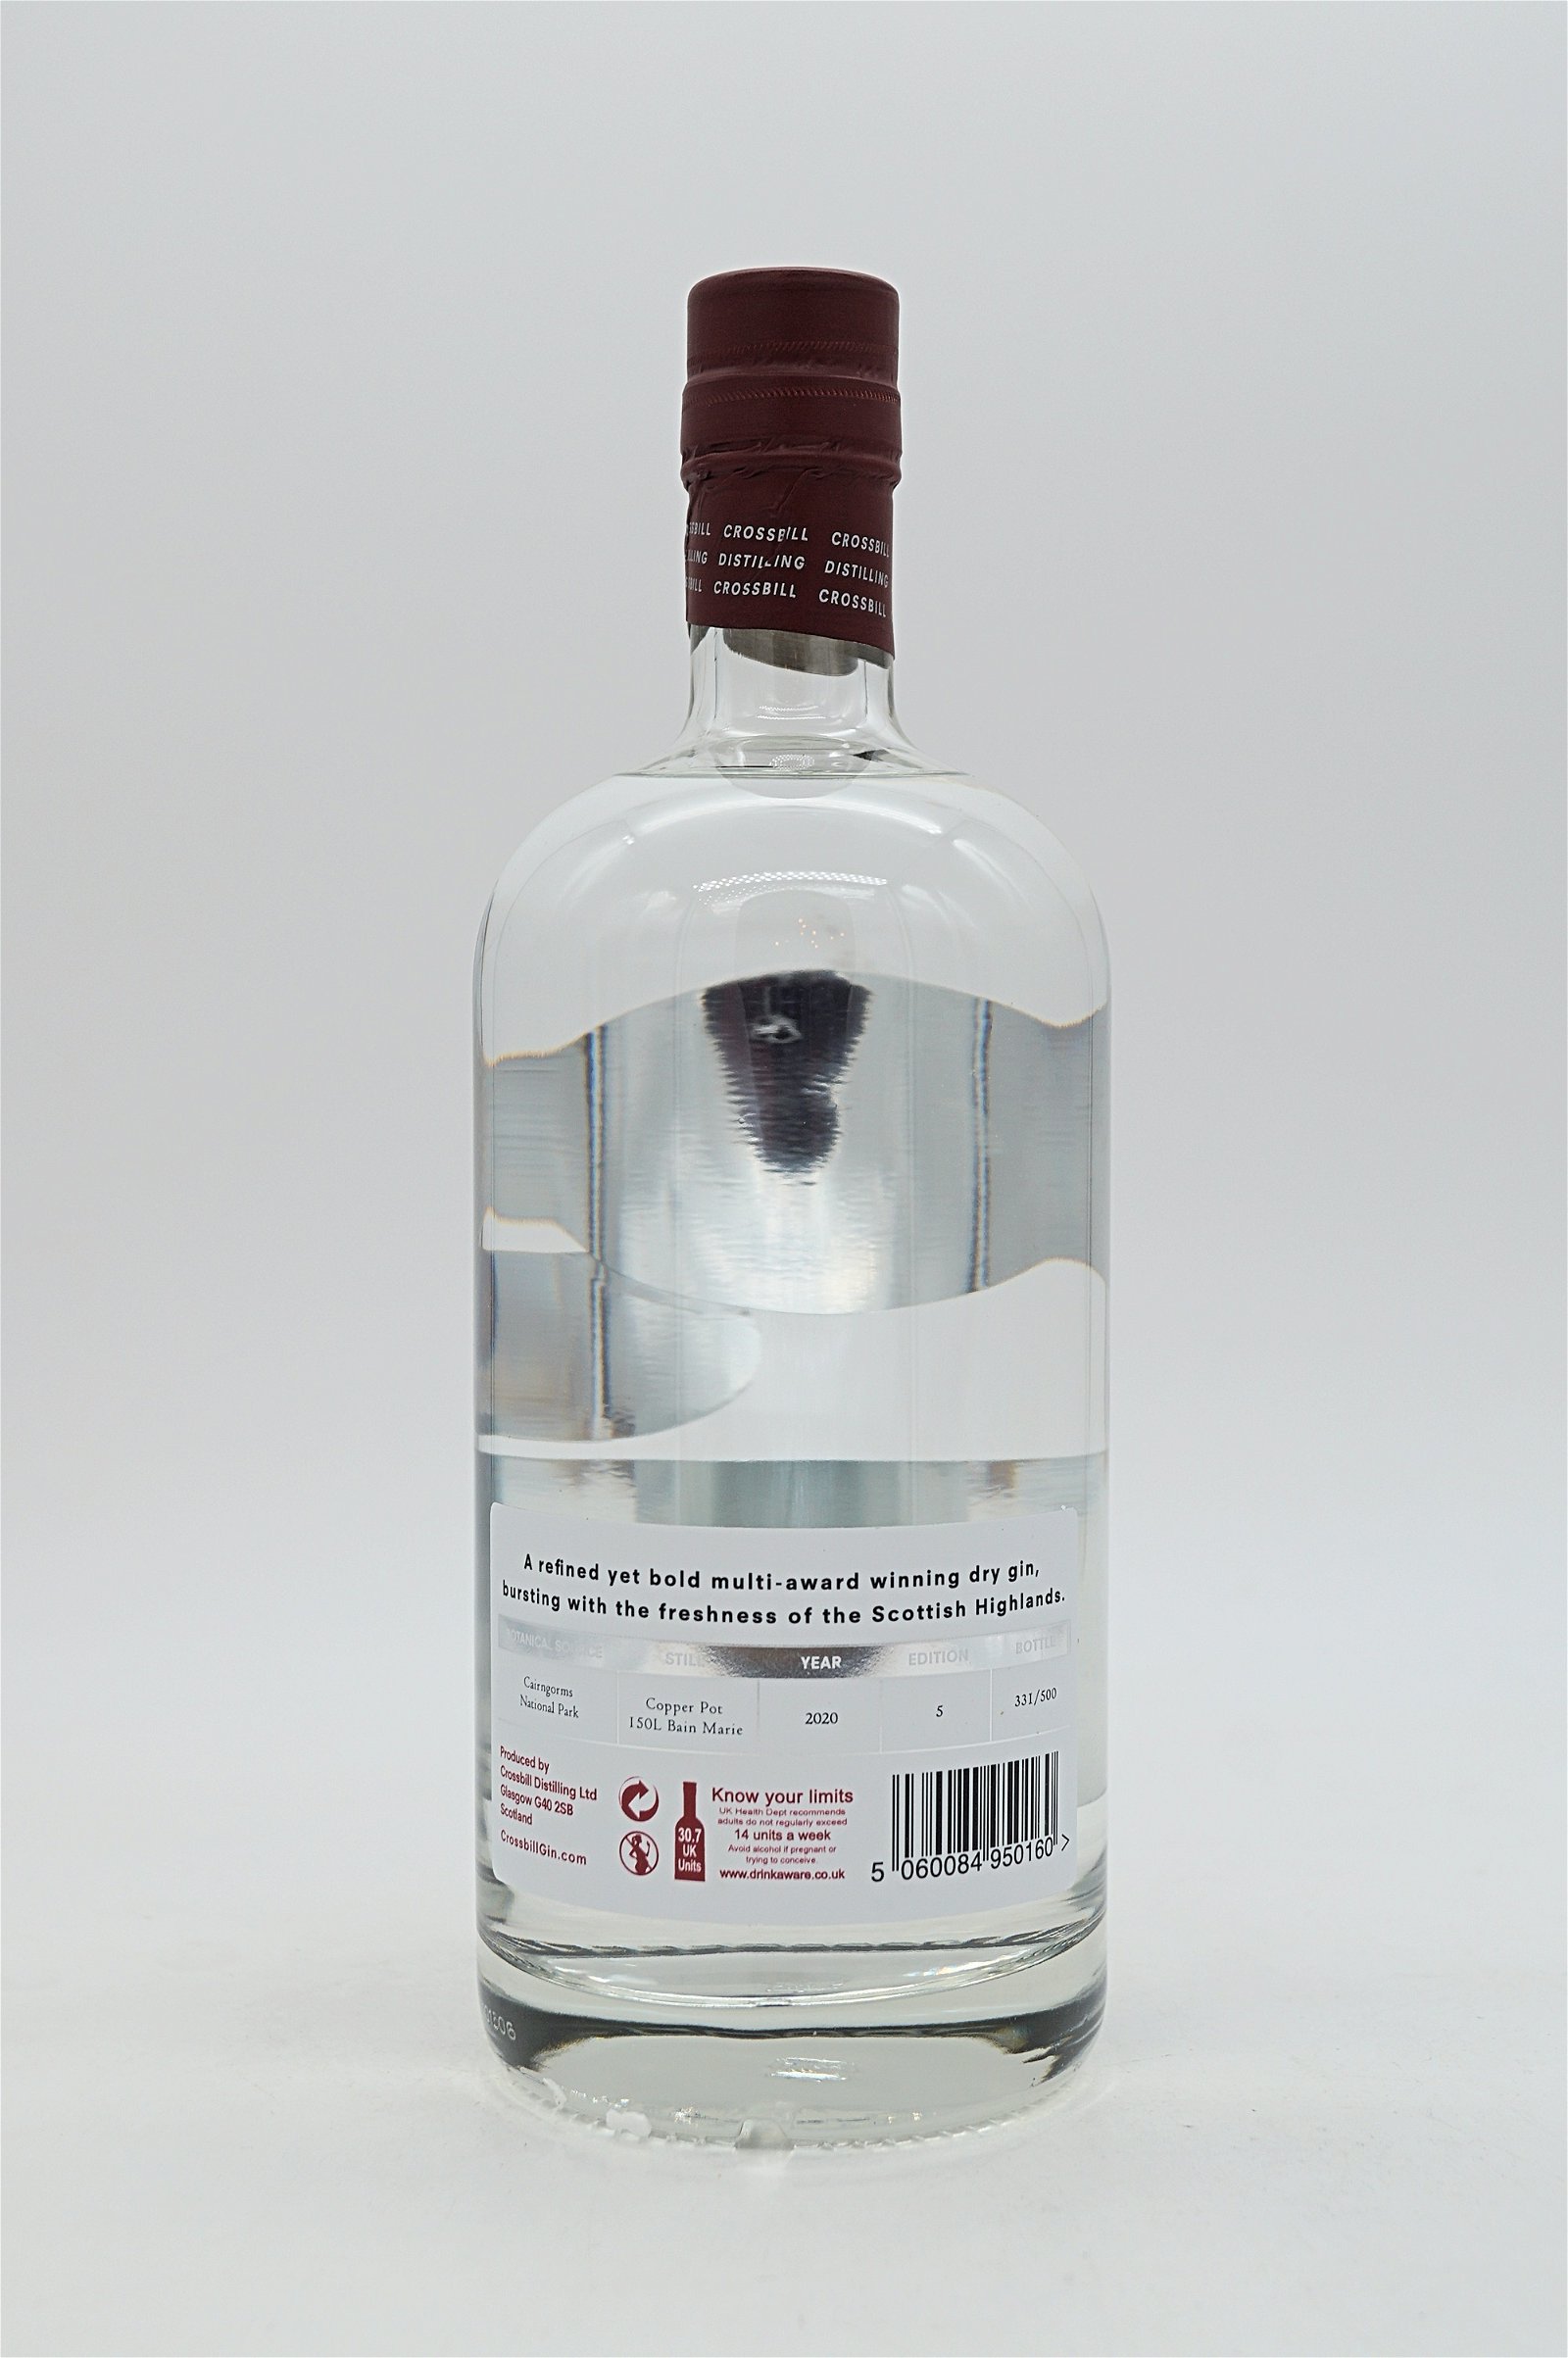 Crossbill 100% Scottish Dry Gin